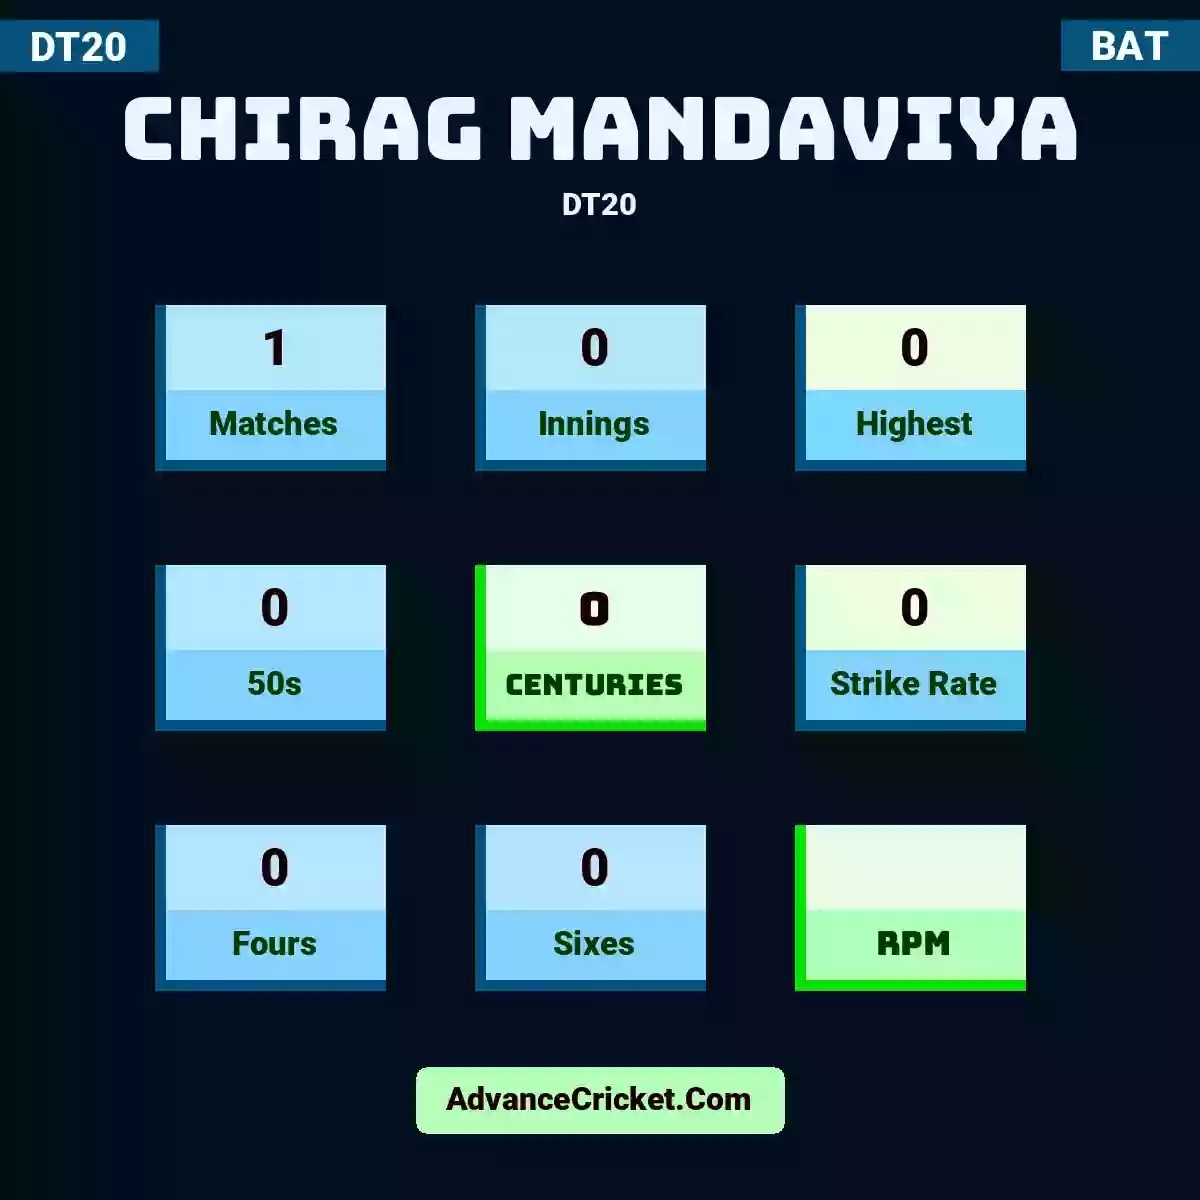 Chirag Mandaviya DT20 , Chirag Mandaviya played 1 matches, scored 0 runs as highest, 0 half-centuries, and 0 centuries, with a strike rate of 0. C.Mandaviya hit 0 fours and 0 sixes.